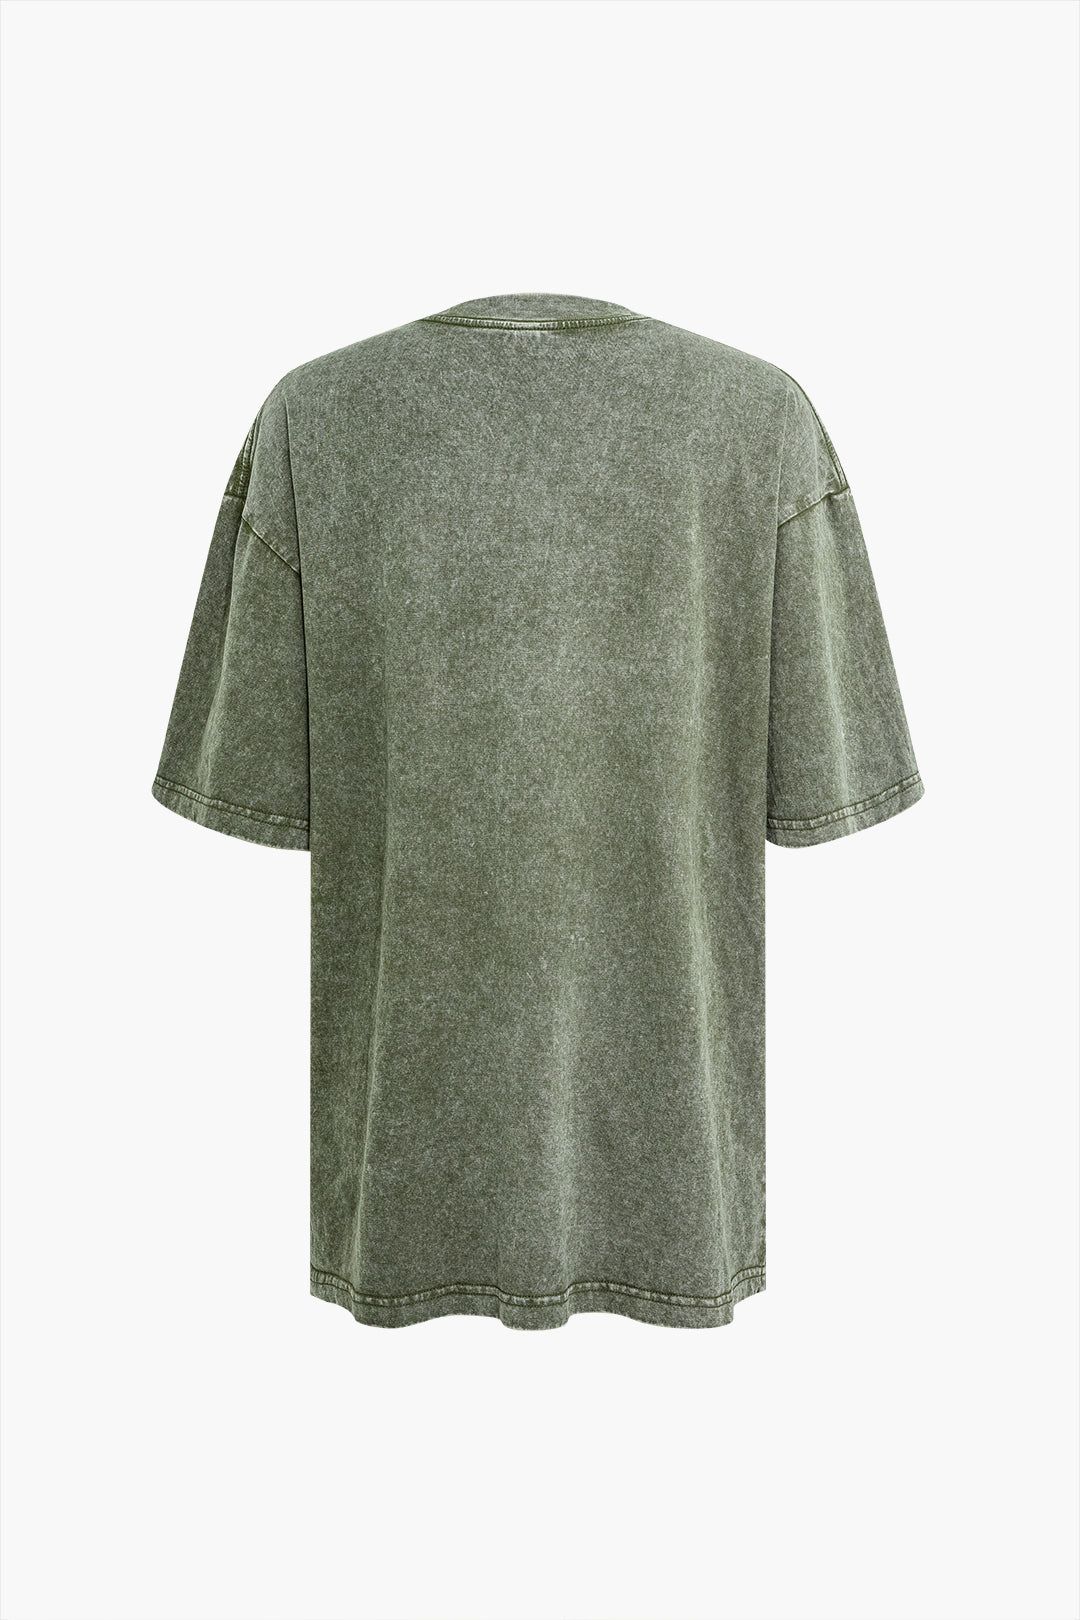 Basic Solid  Loose Washed T-Shirt